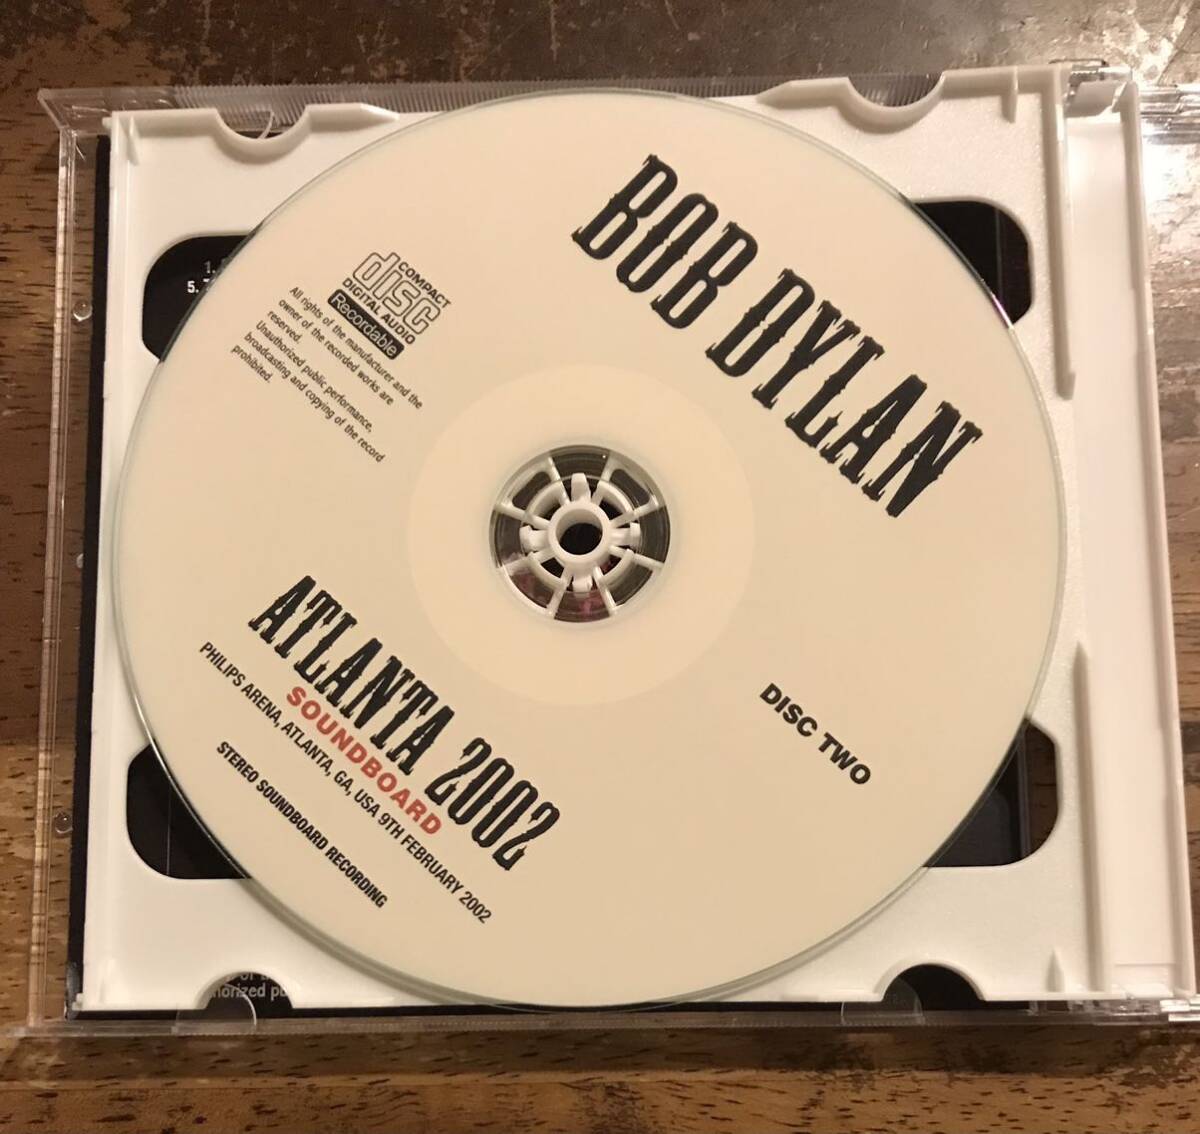 Bob Dylan / Atlanta 2002 Soundboard / 2CDR / Philip’s Arena, Atlanta, GA, 9th February 2002 / Stereo Soundboard Recording / ボブ_画像7